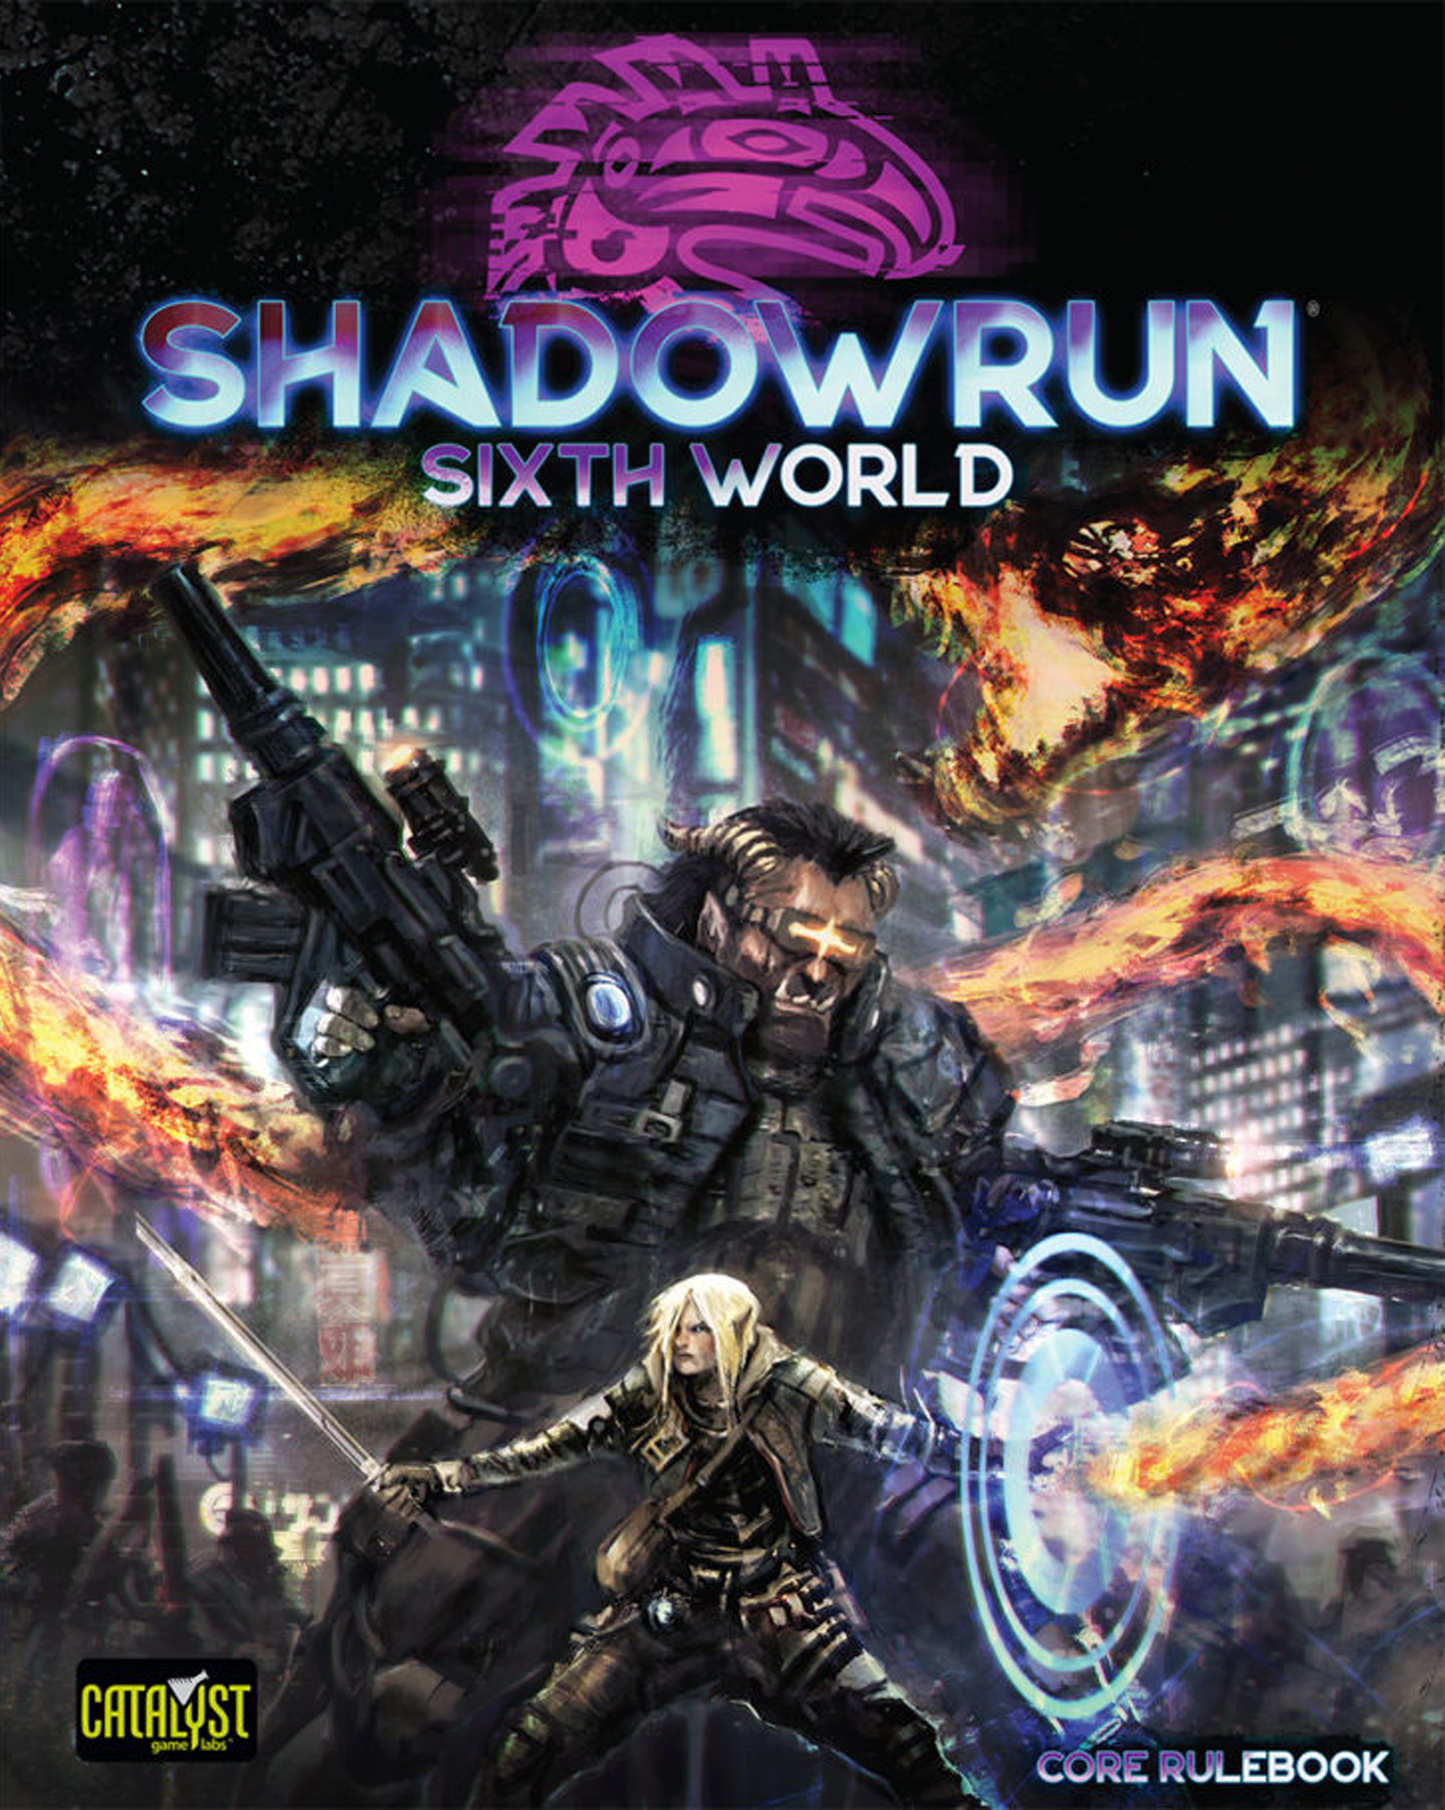 Shadowrun 6th Edition Core Rulebook (Sixth World)